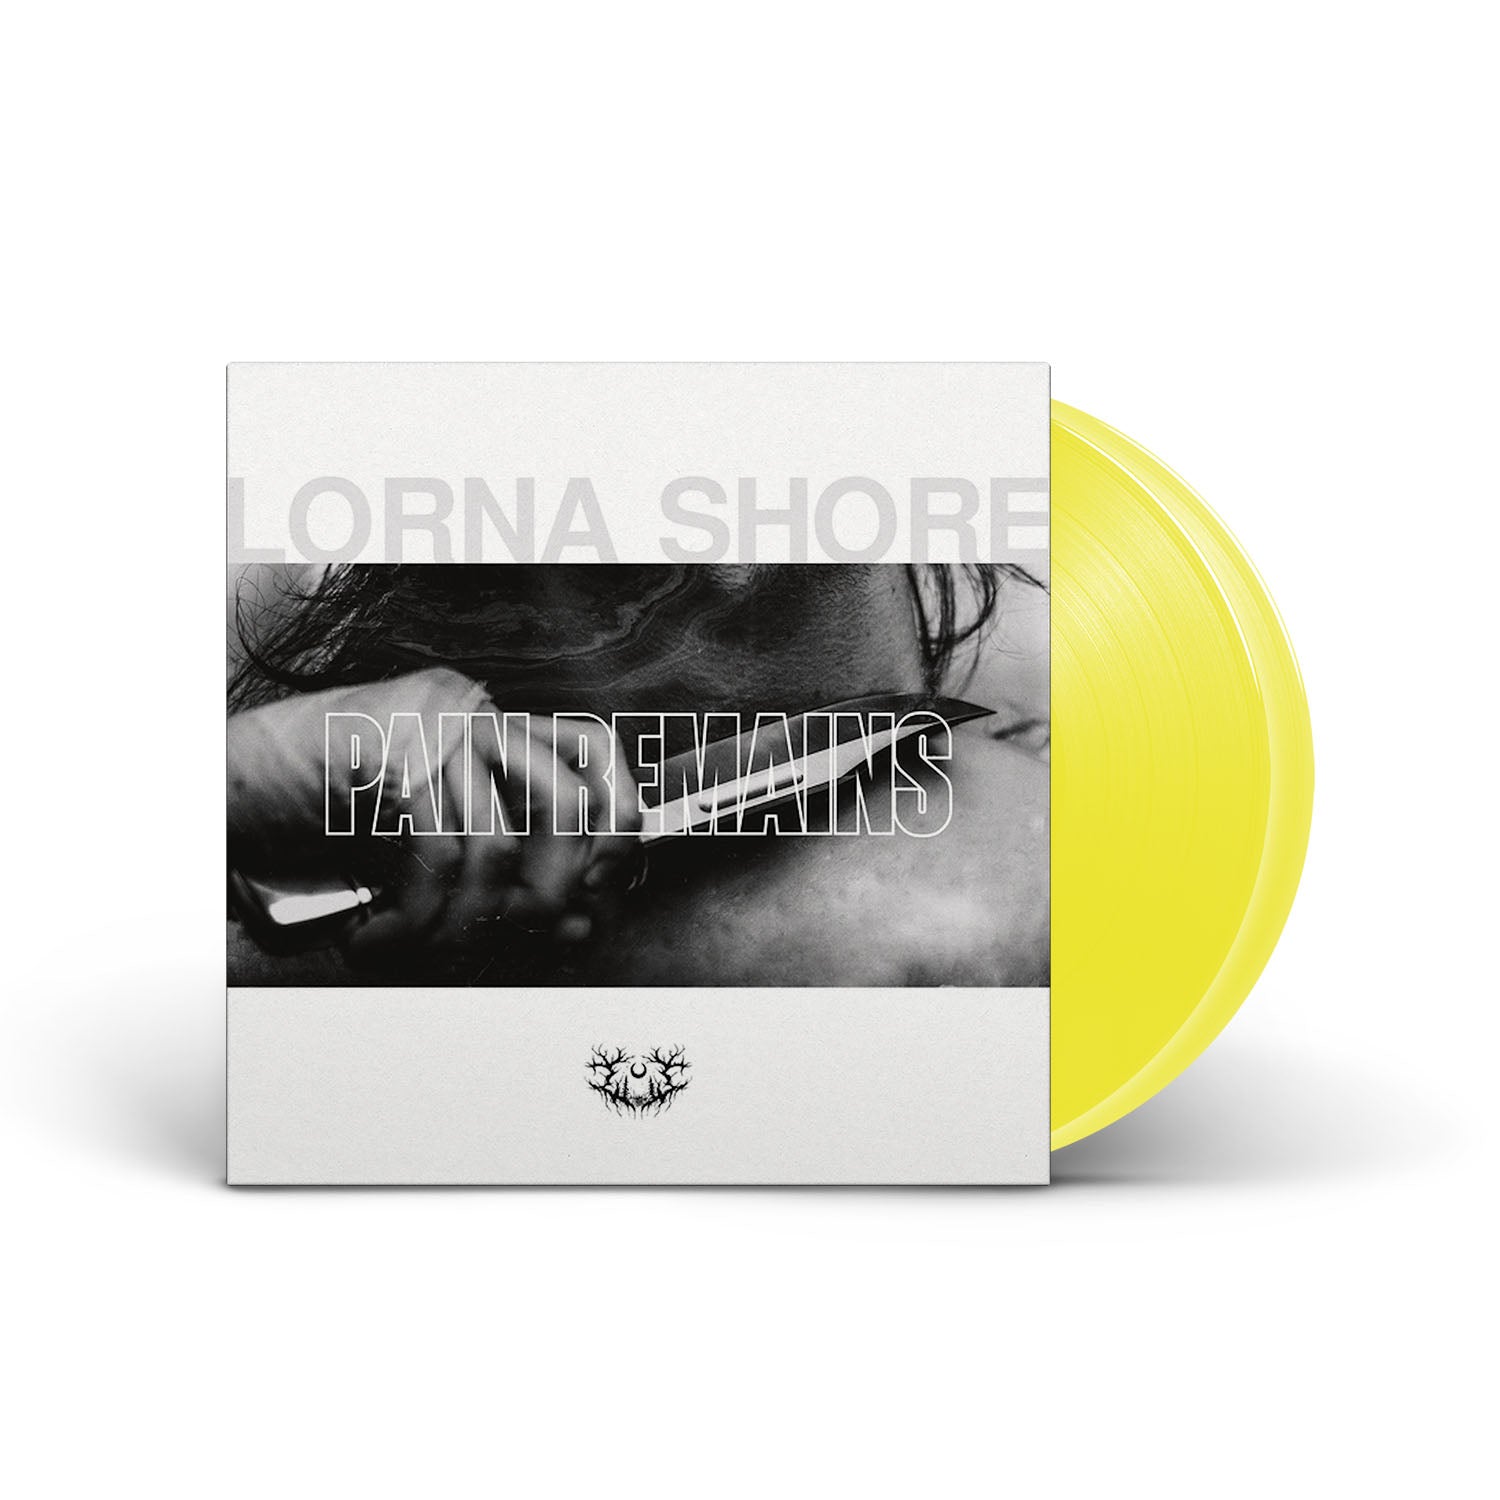 LORNA SHORE - Pain Remains - Transparent Highlighter Yellow 2xLP